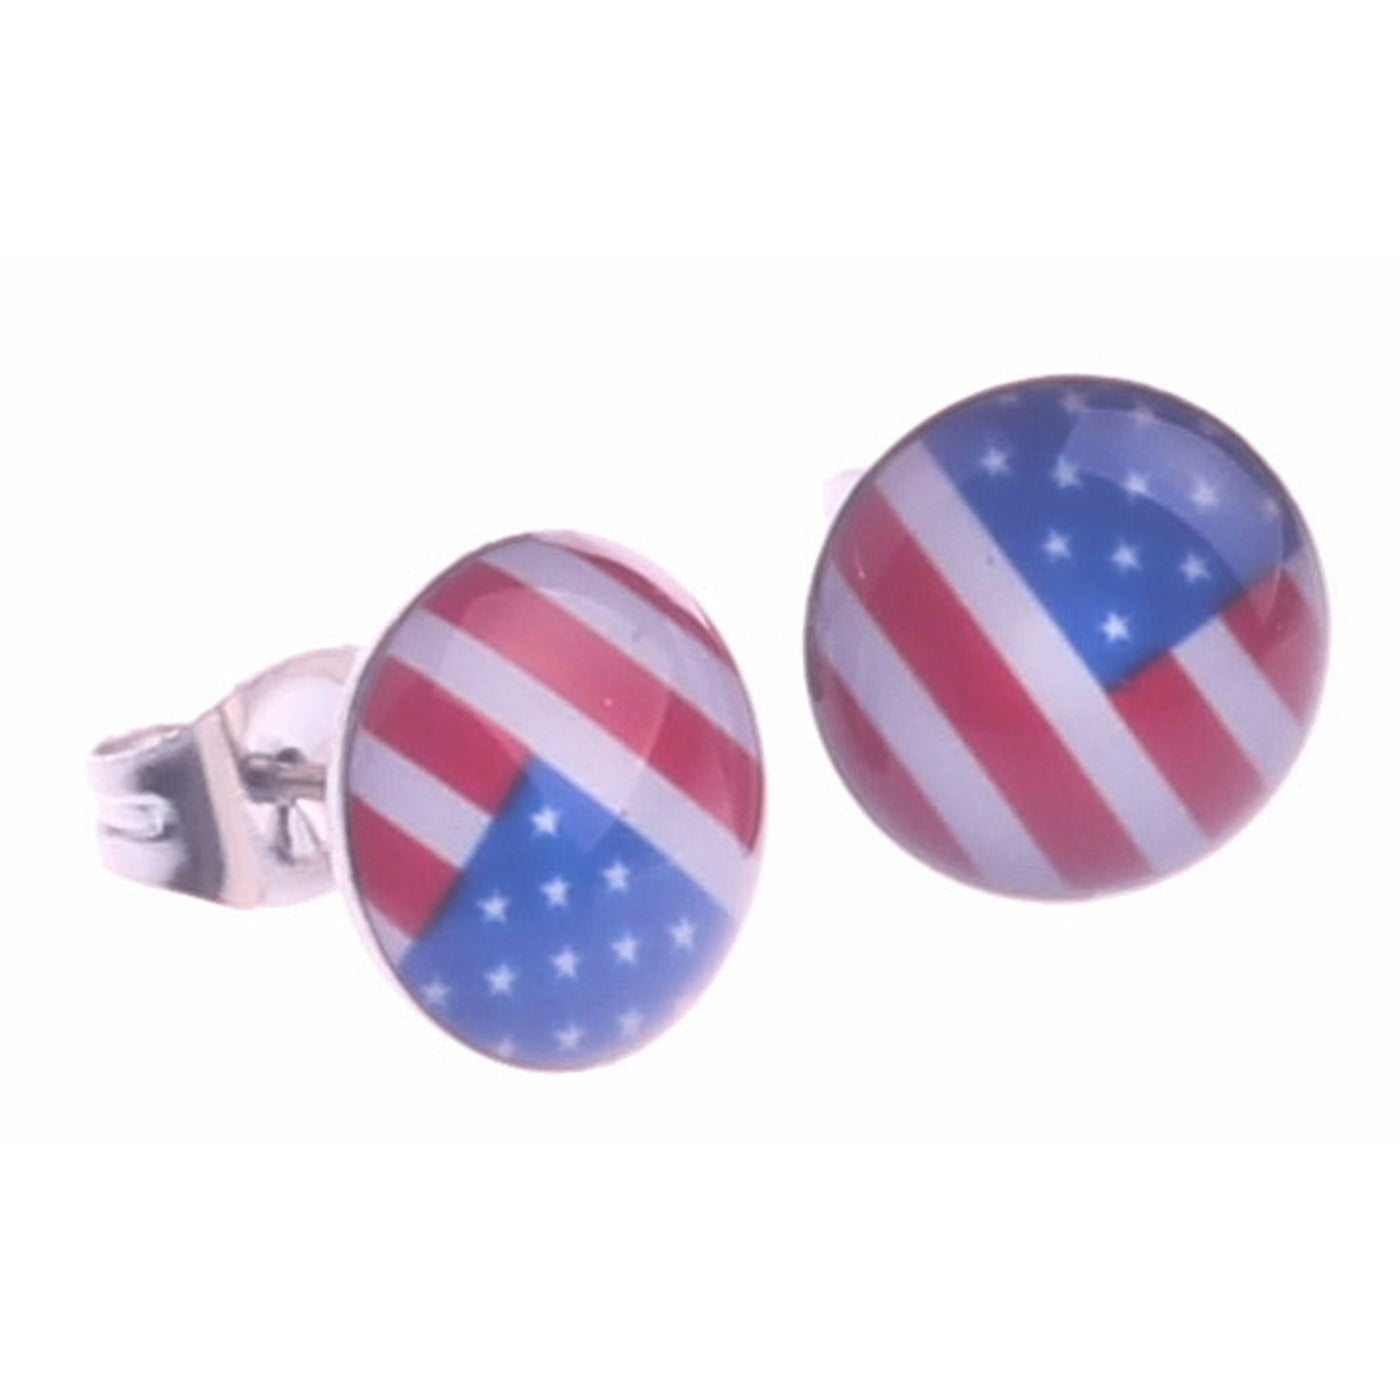 Yankee flag earrings